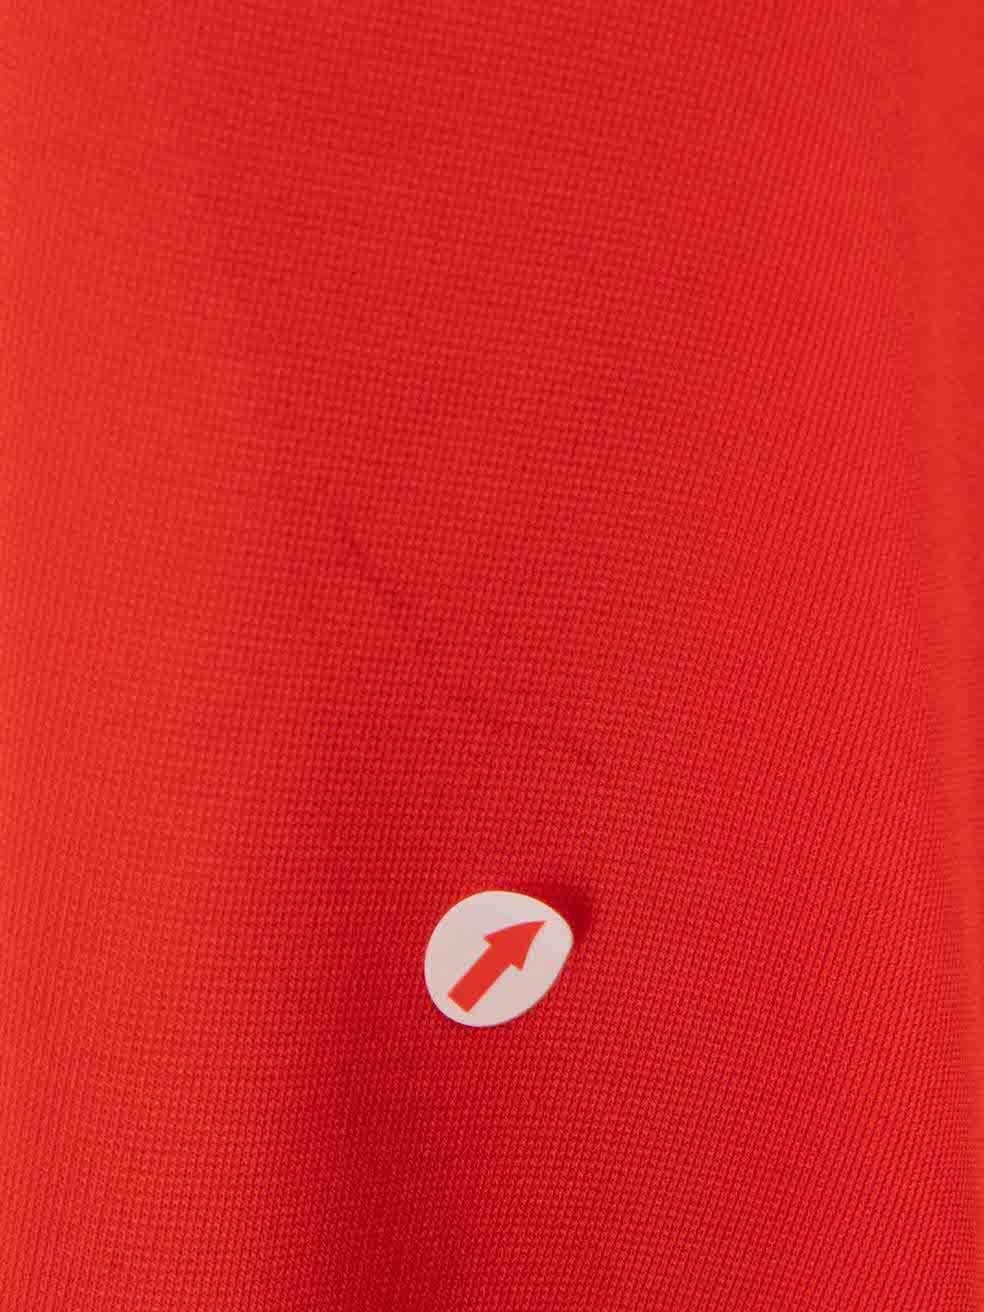 Philipp Plein Red Sleeveless Flared Mini Dress Size M For Sale 2